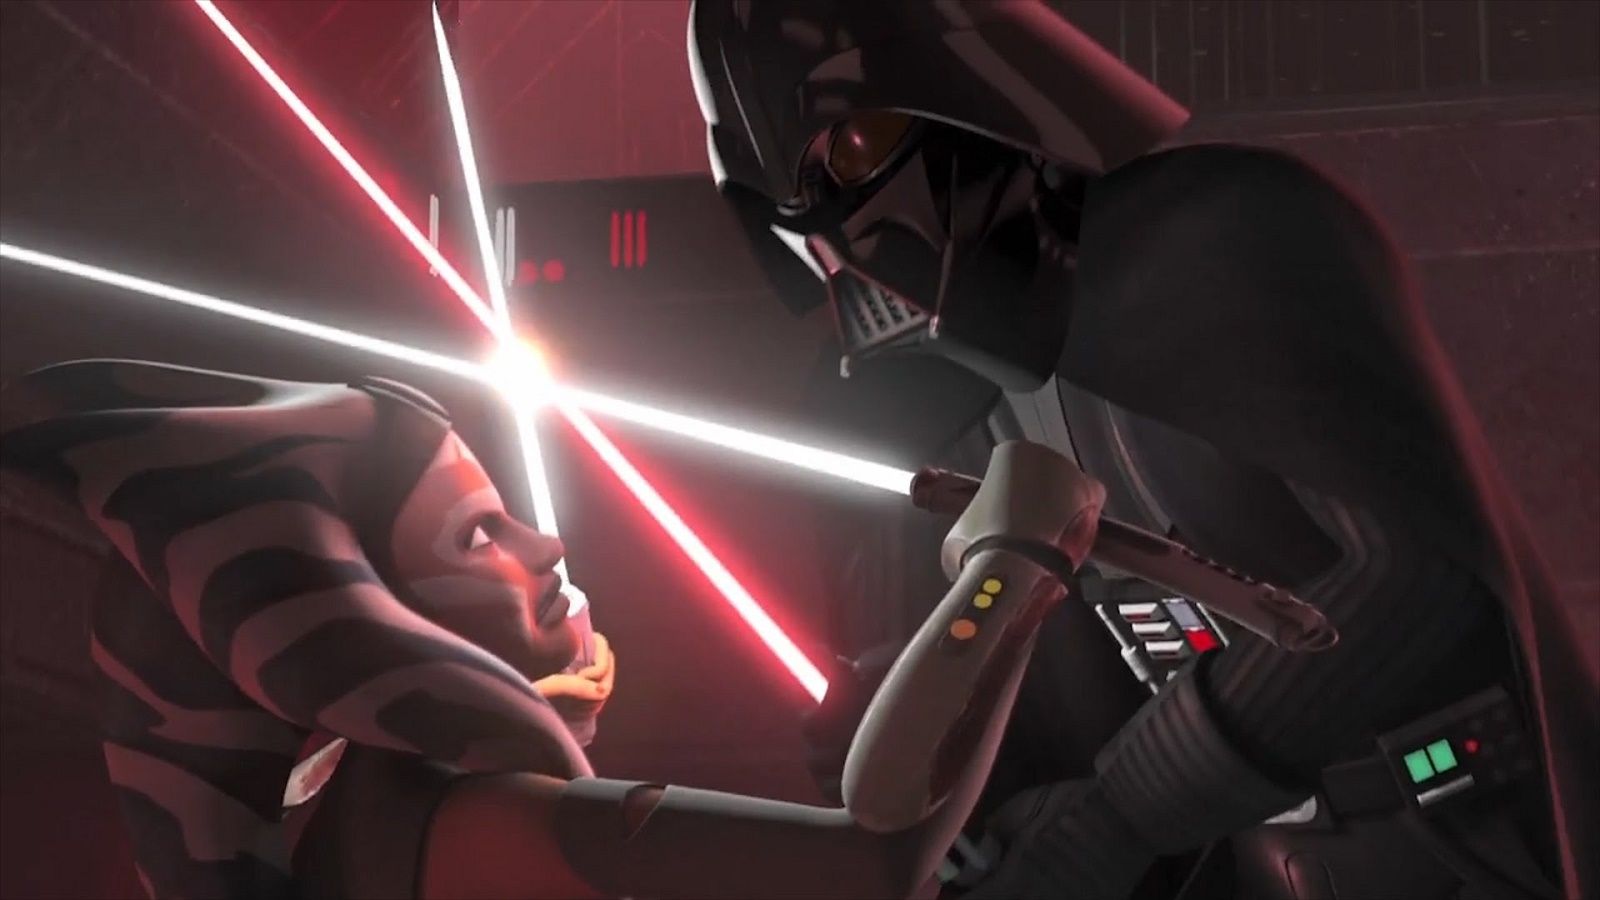 Ahsoka vs Darth Vader in Star Wars Rebels.